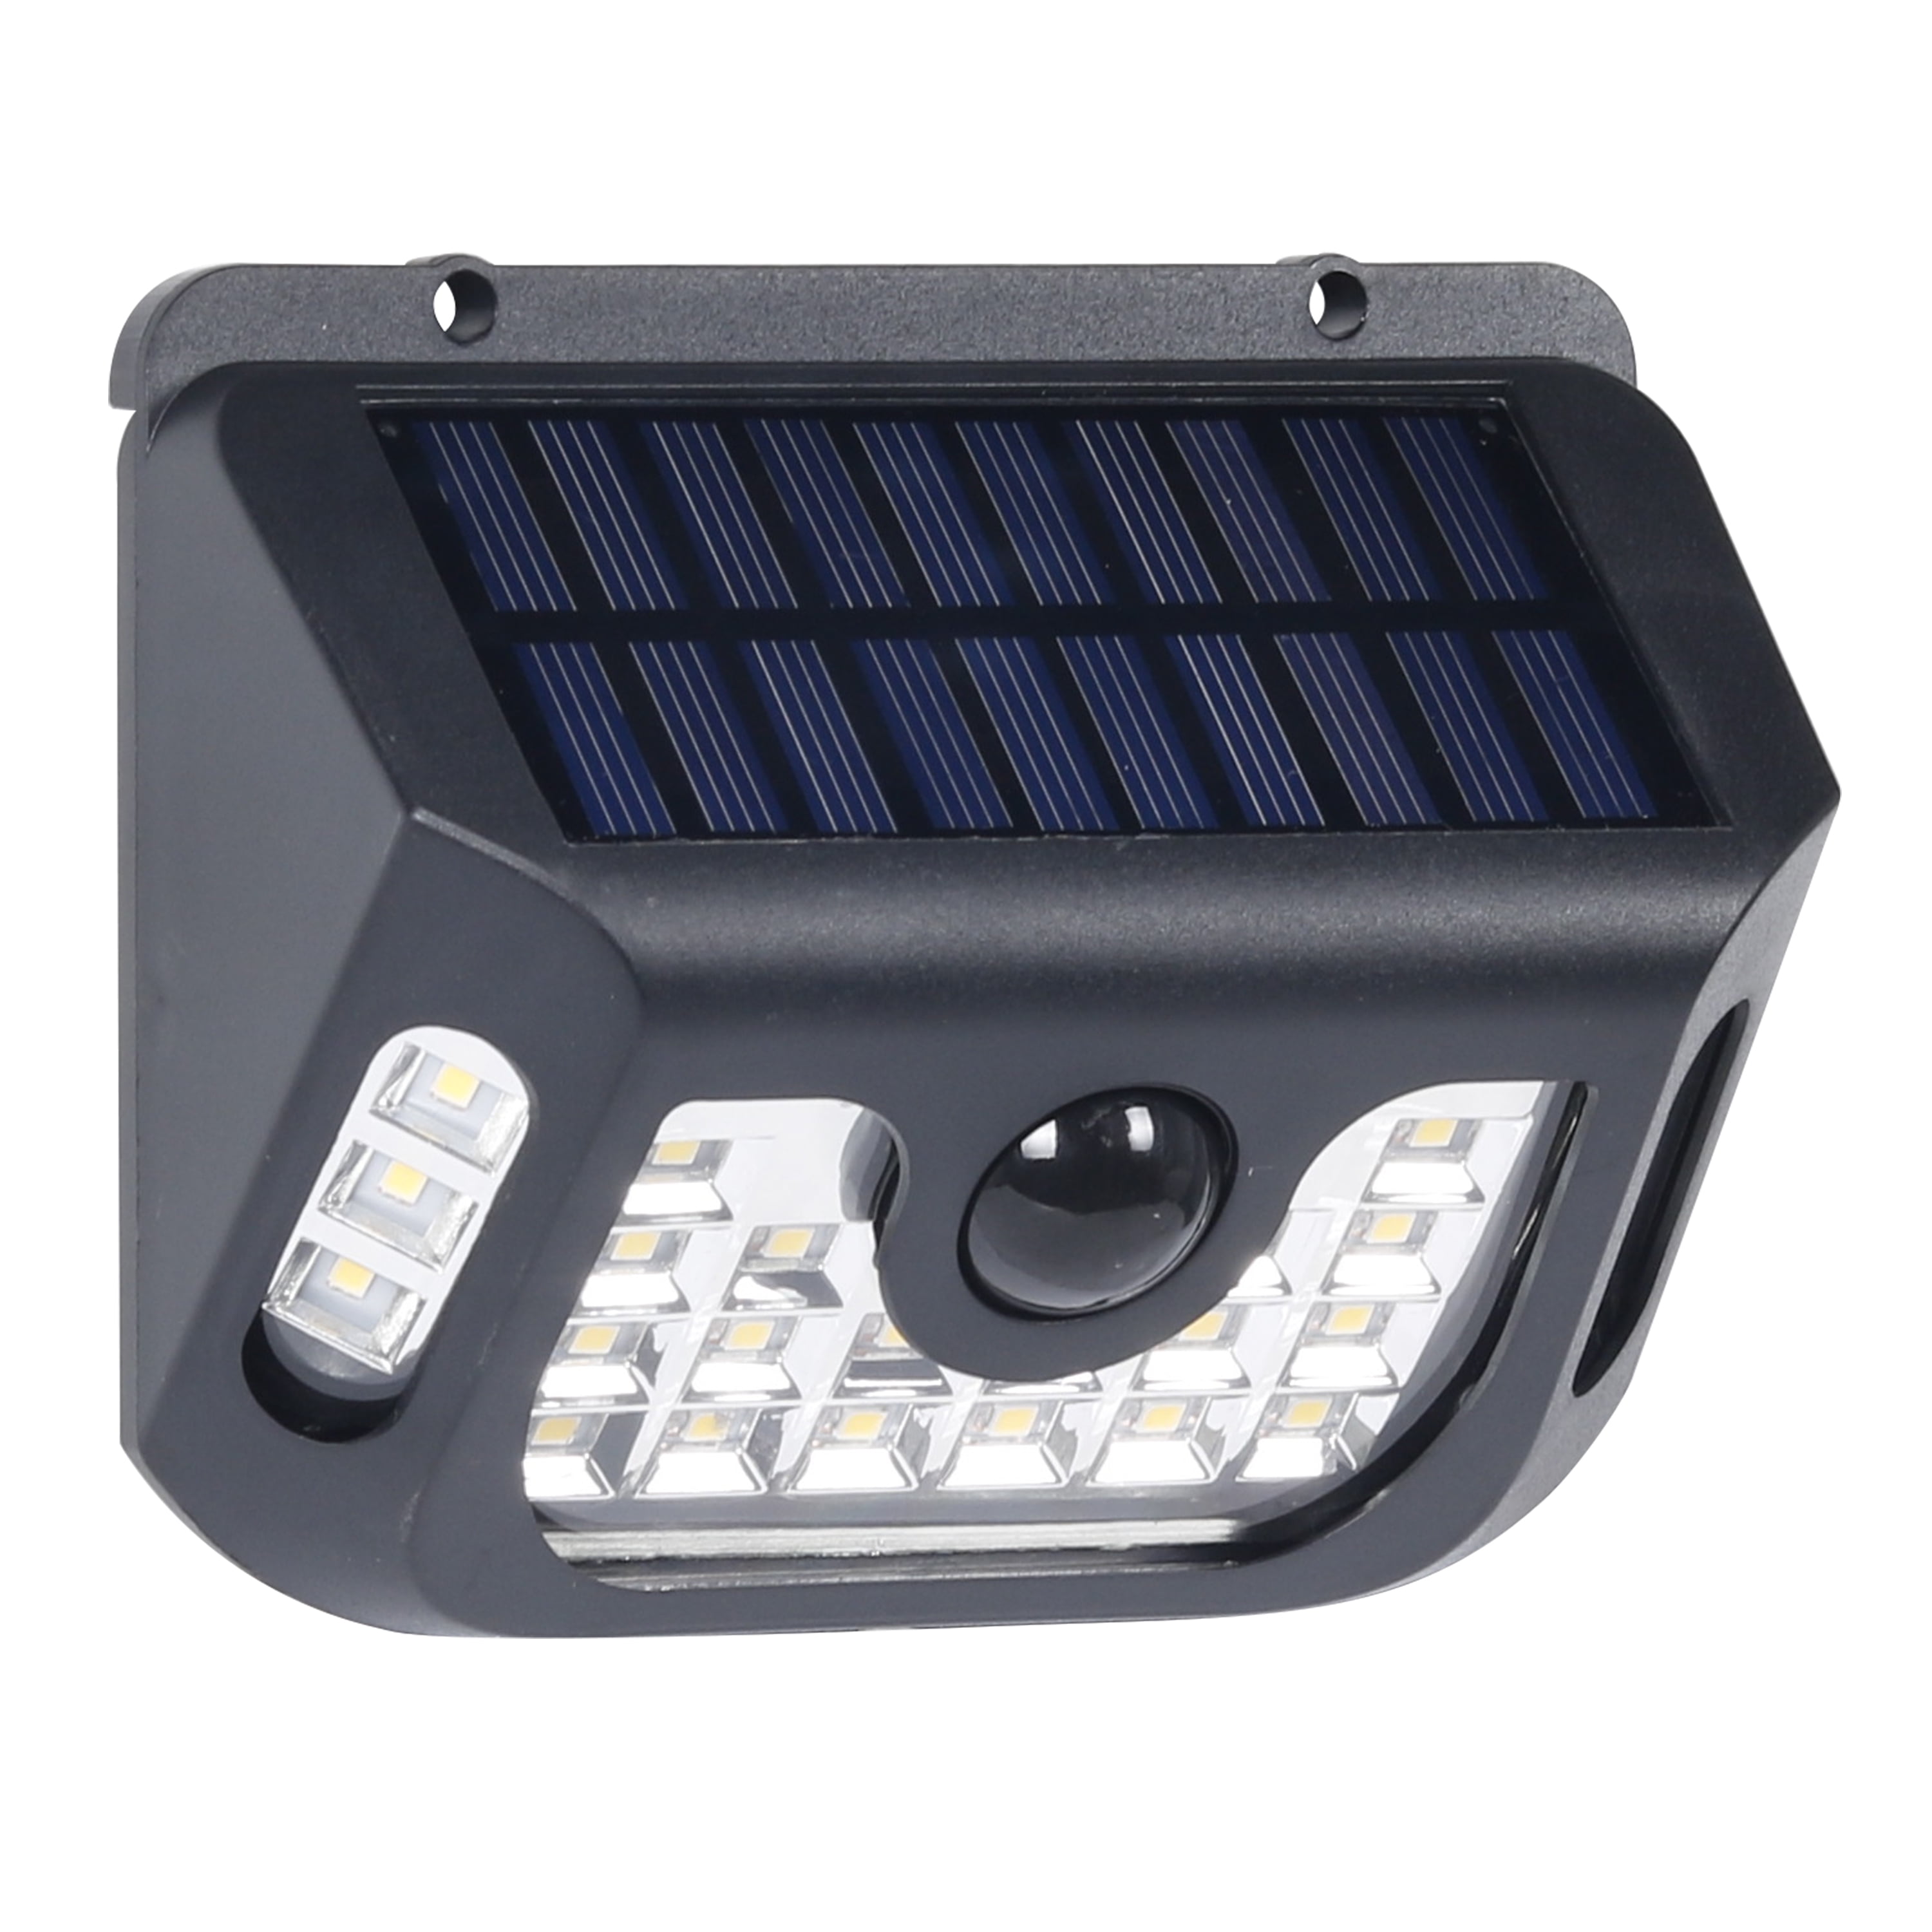 KUFUNG Solar Motion Detector Lights Outdoor48 LED Brightness Sensor Light for...